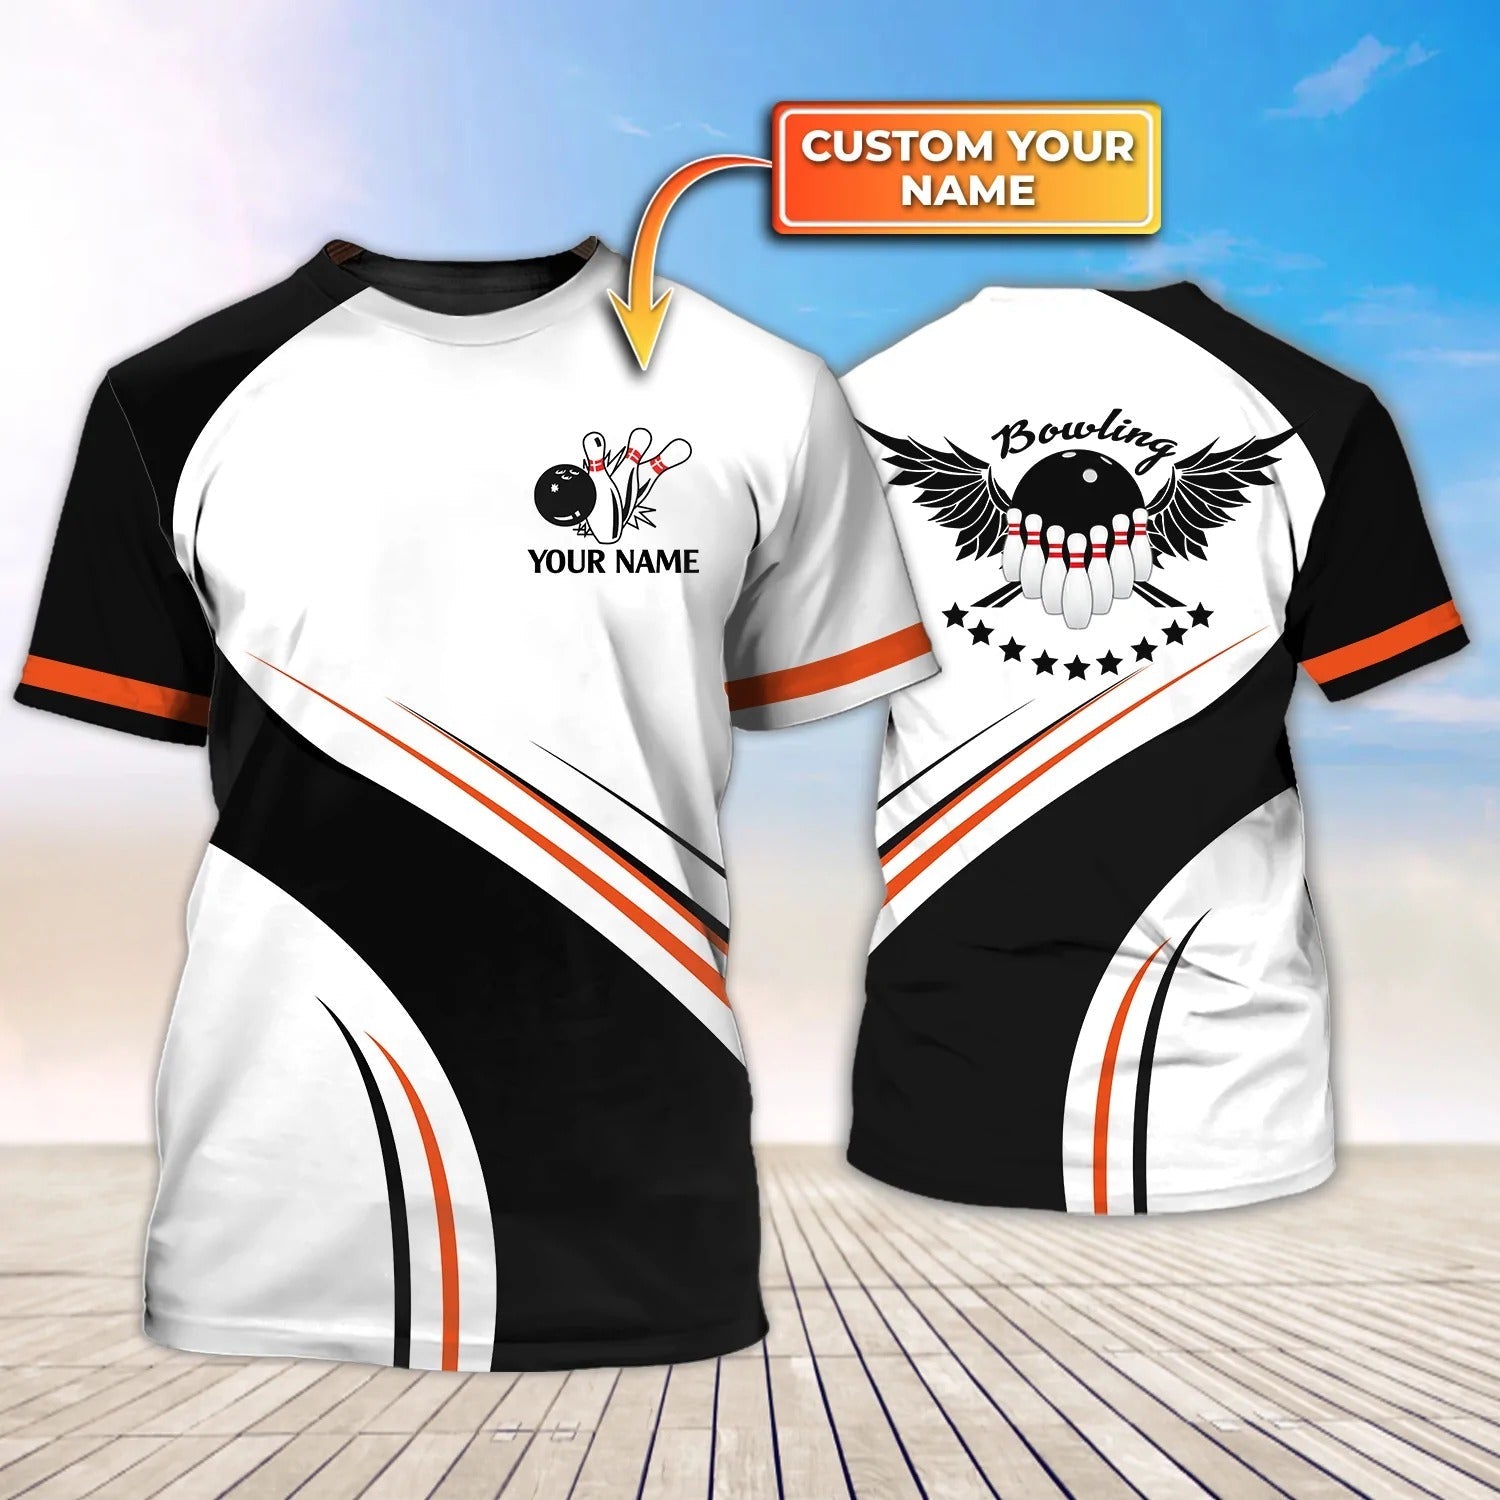 Bowling Ball Uniform Customized 3D Print Shirt For Bowler/ Bowling Player Present